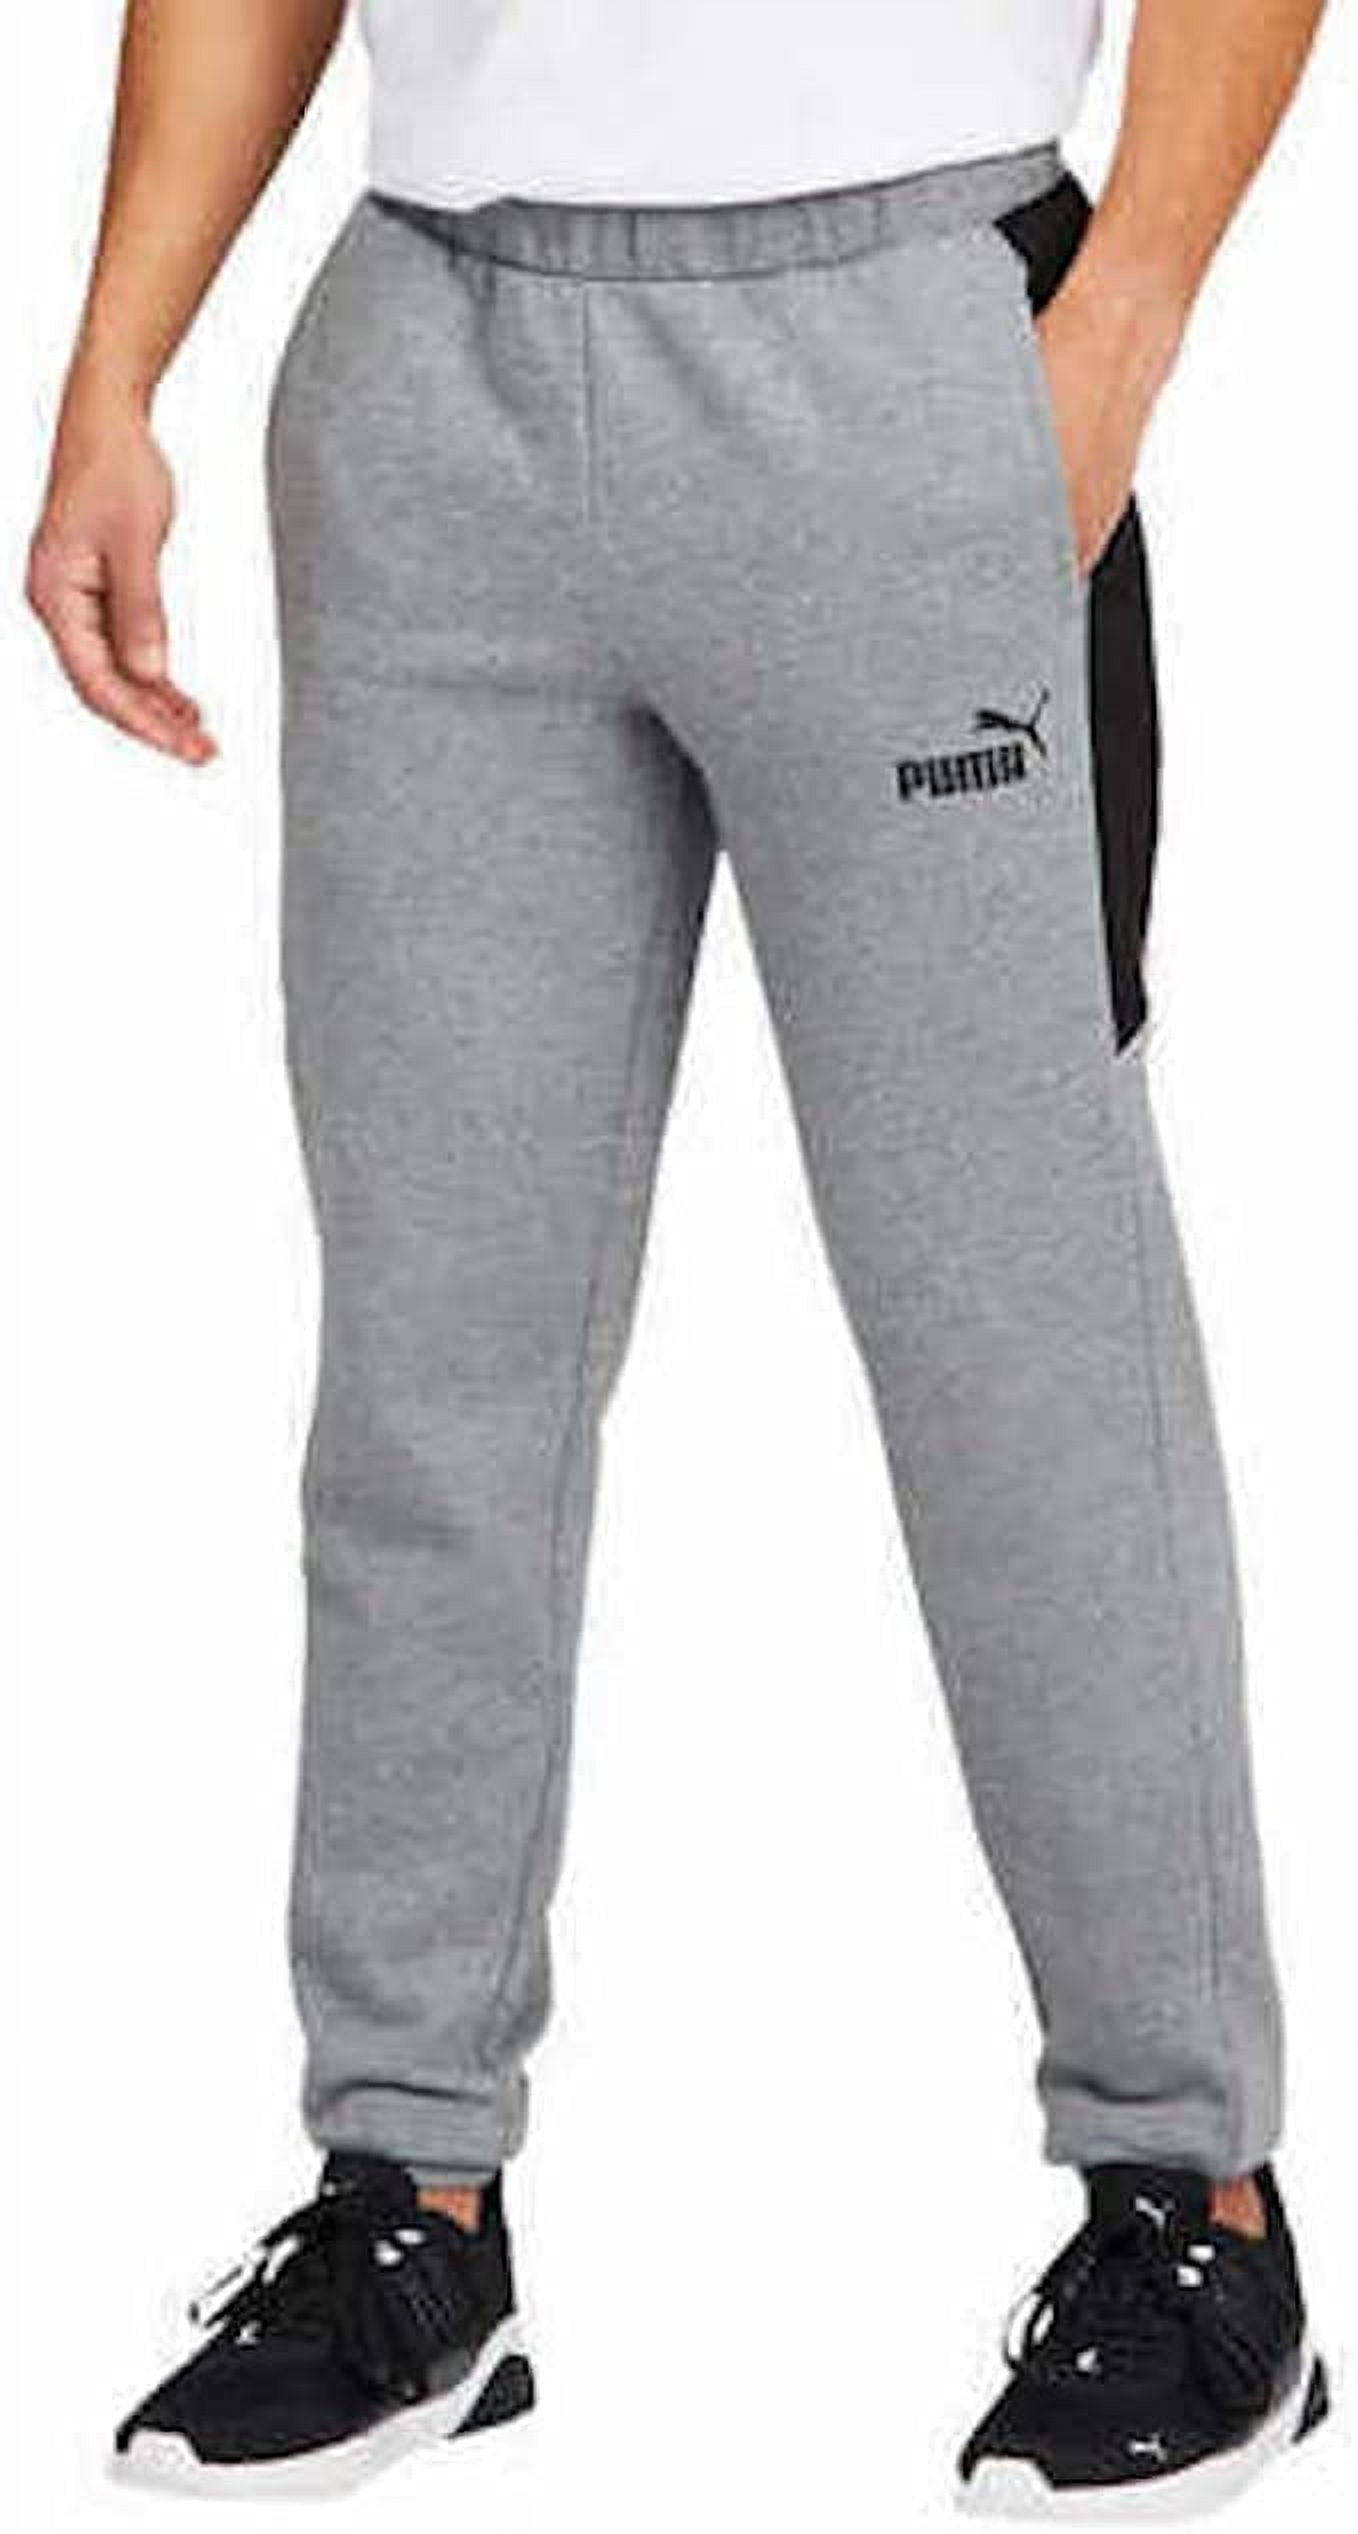 Buy Puma Womens Essentials Small Logo Fleece Pants Light Grey Heather